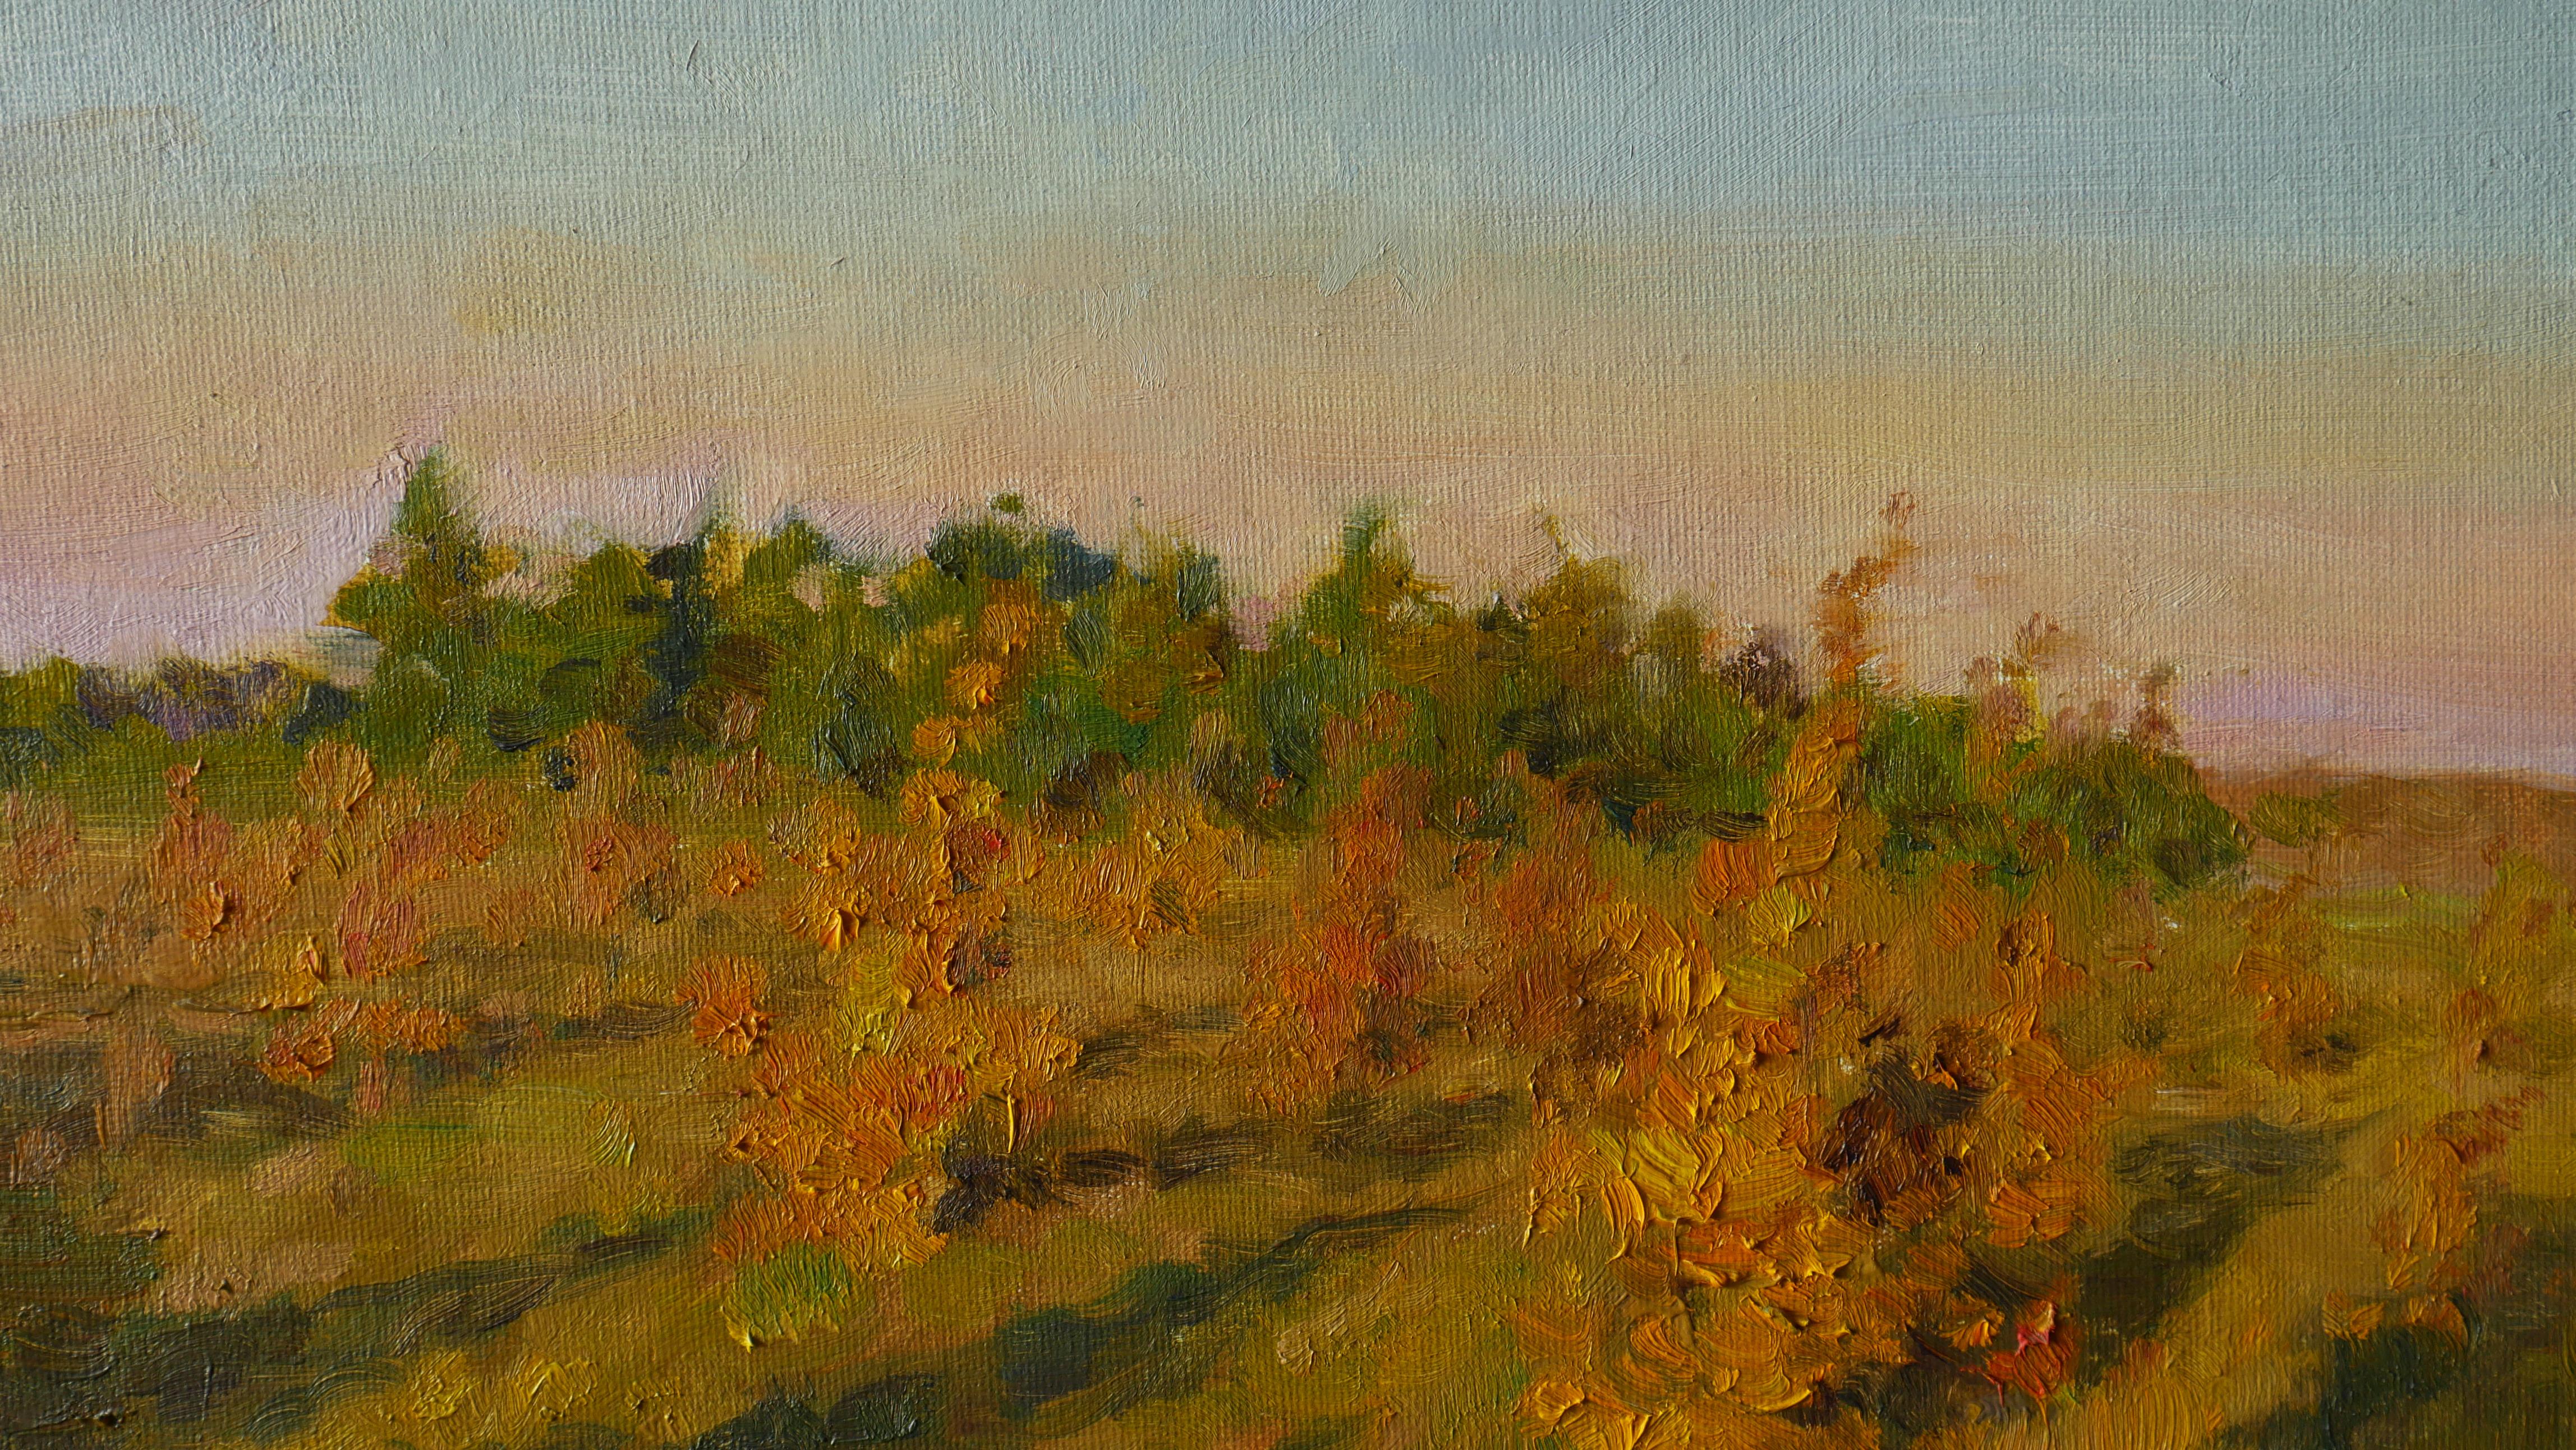 The Autumn Sunset - sunset landscape painting For Sale 2